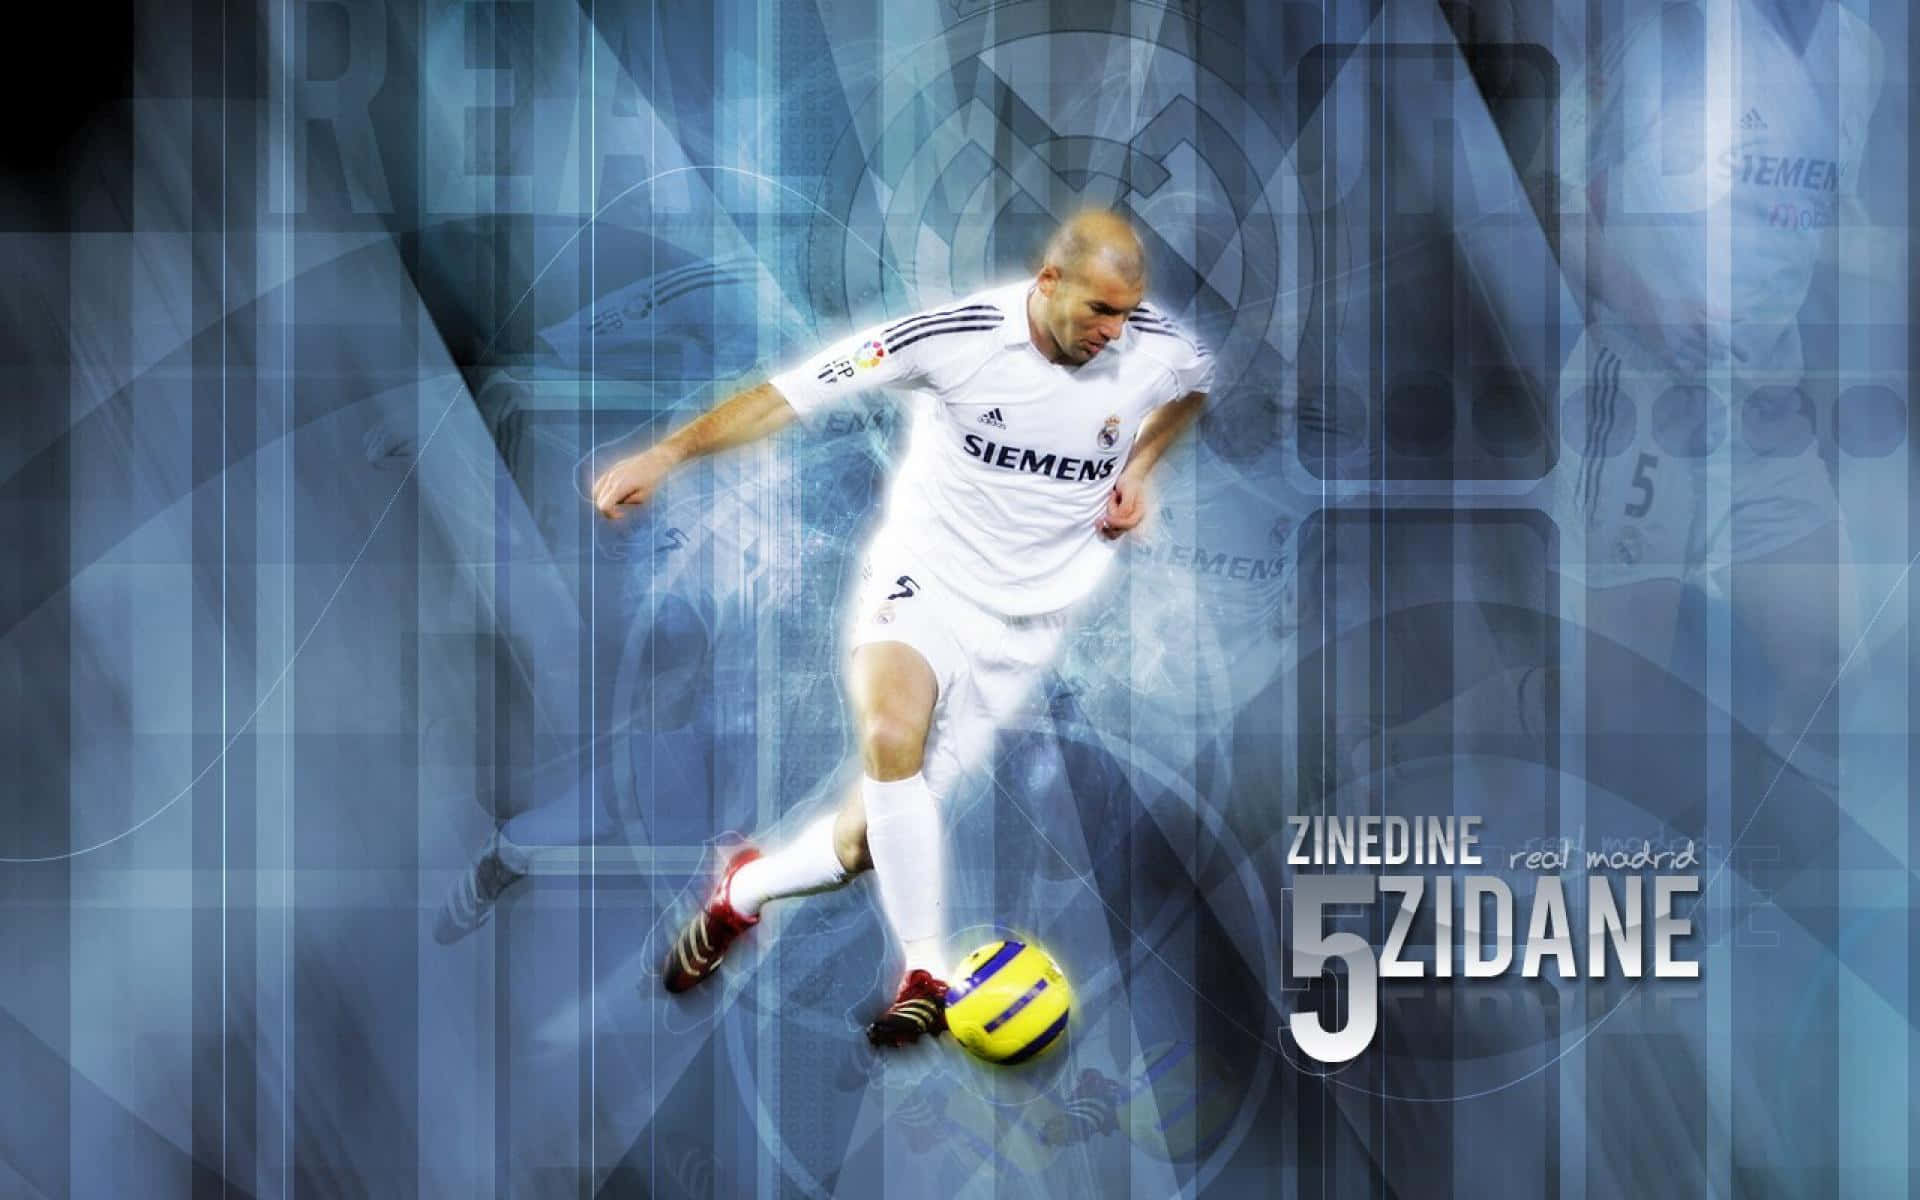 Zinedine Zidane Real Madrid Fc Photo Background Wallpaper